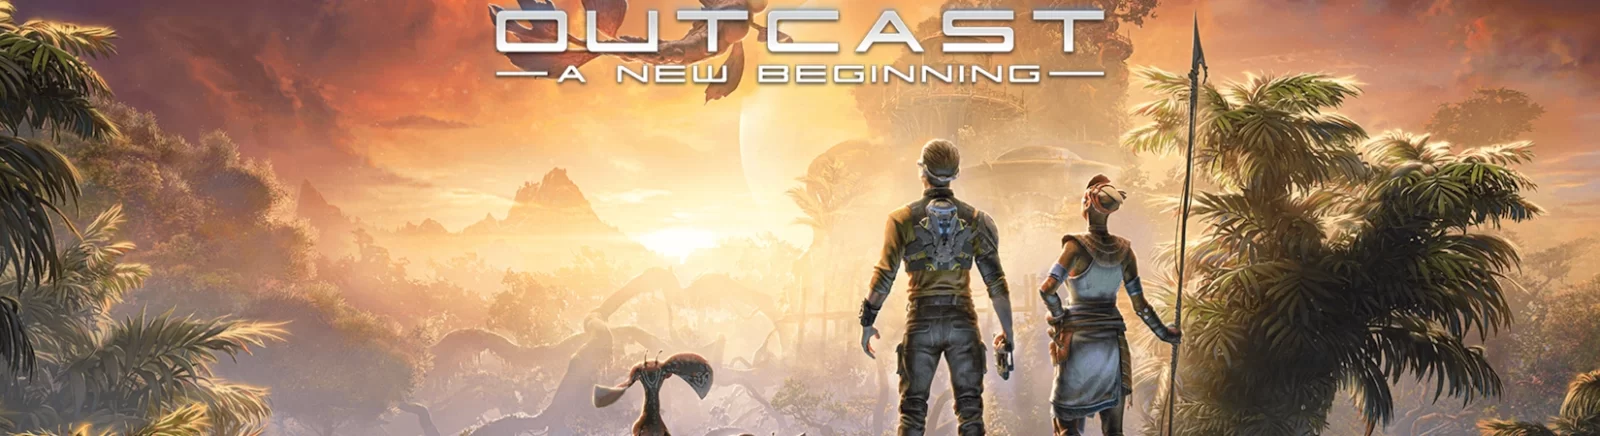 outcast-A.New.Beginning-GB-Slider